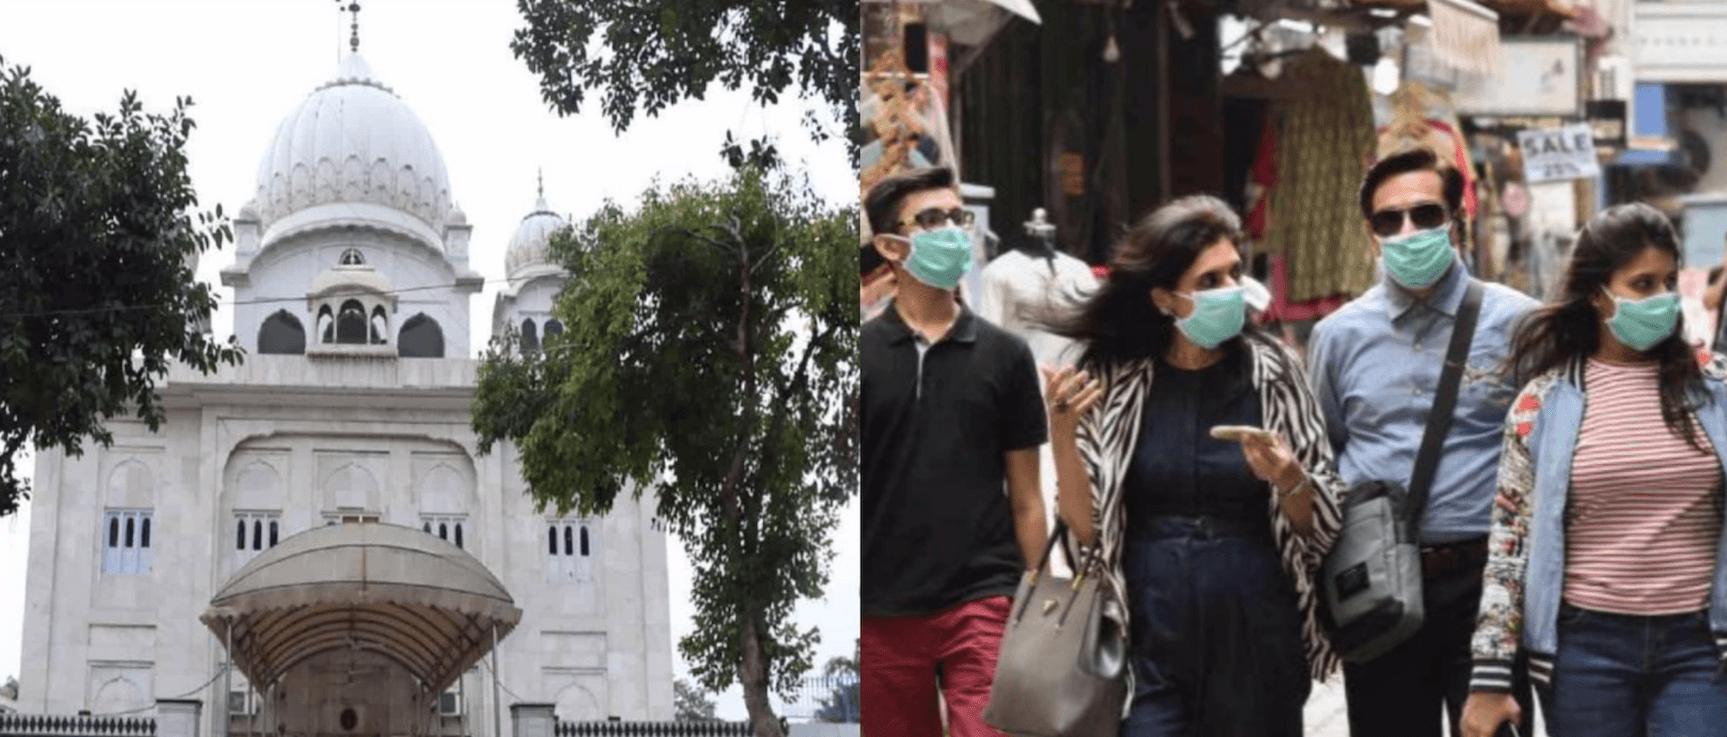 Not All Heroes Wear Capes: Delhi Gurudwara Offers Free Meals, Quarantine Space Amid Crisis